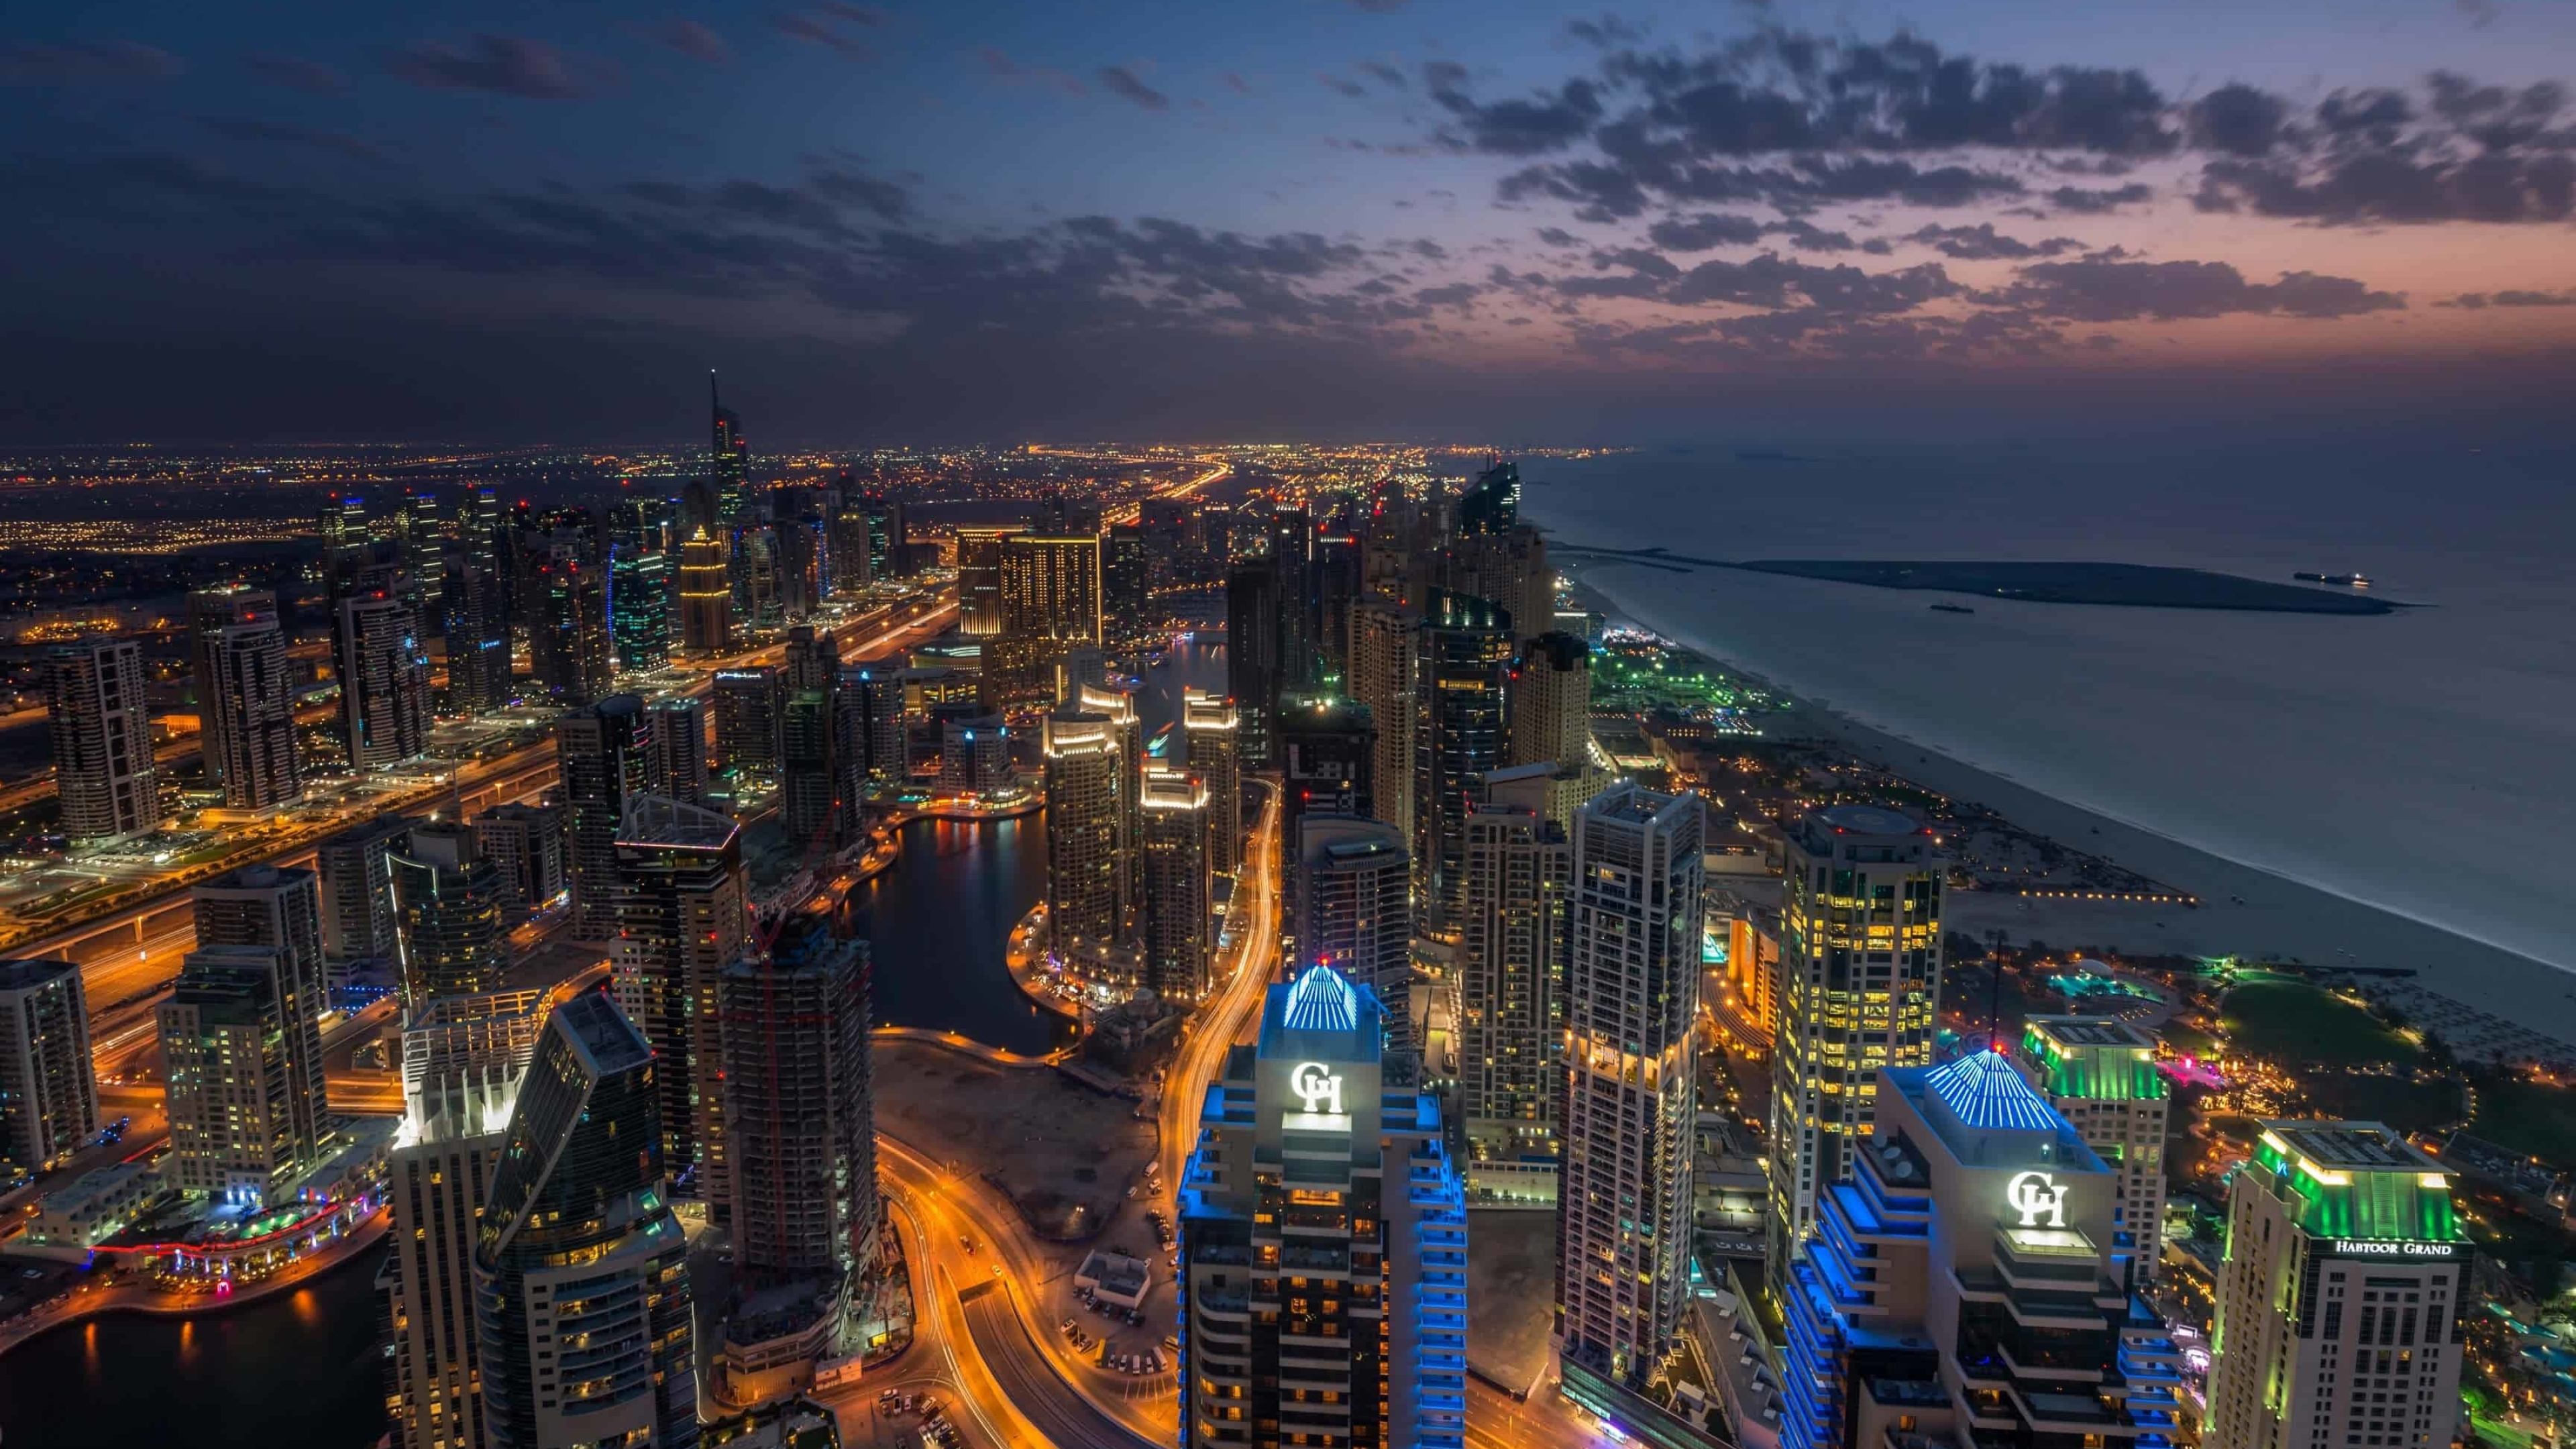 Dubai: A city of skyscrapers, ports, and beaches, where big business takes place alongside sun-seeking tourism. 3840x2160 4K Wallpaper.